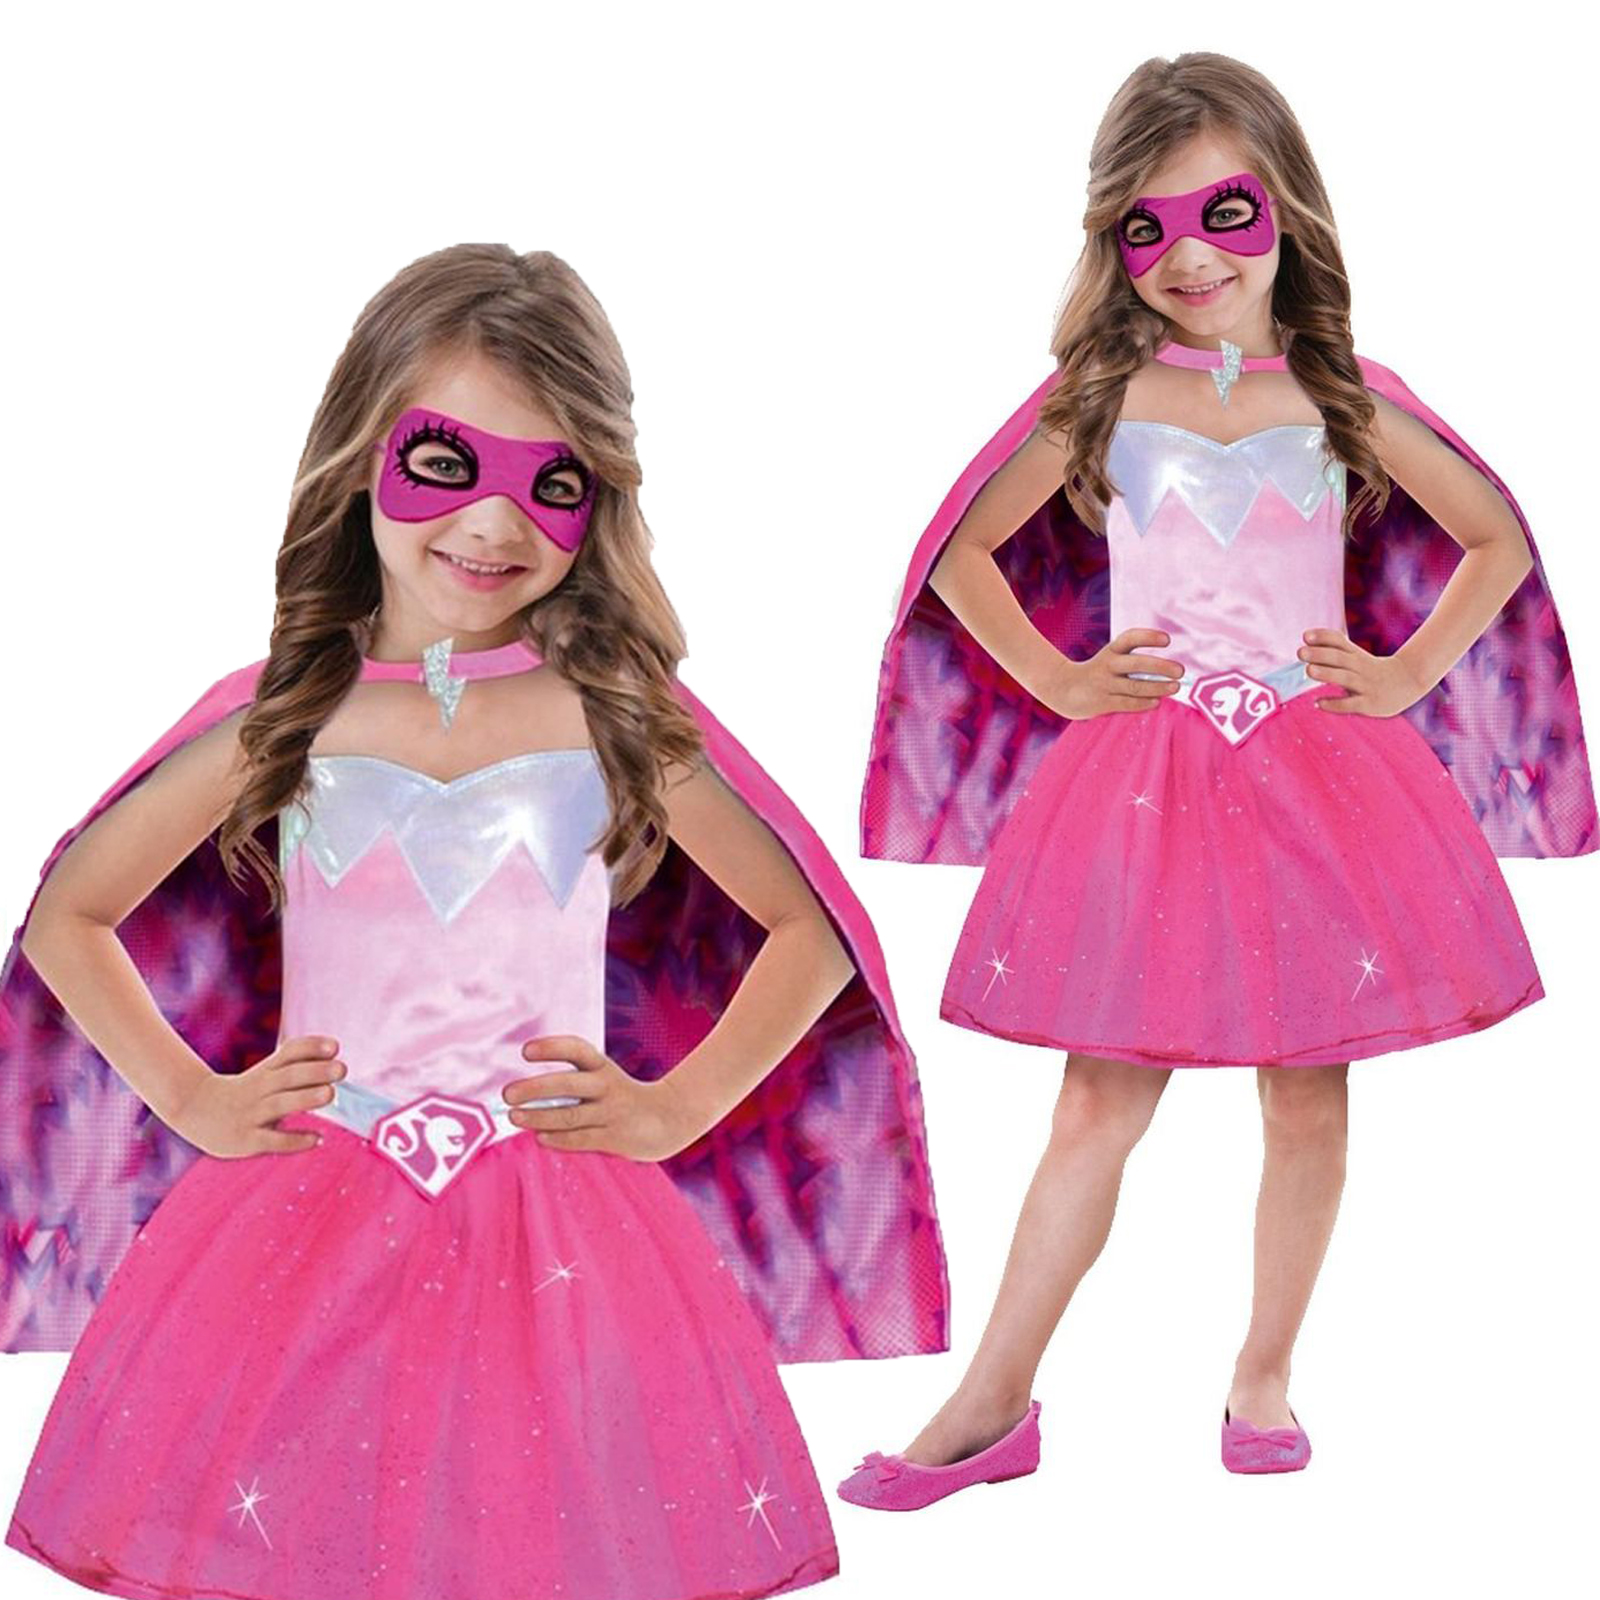 Christys Dress Up Barbie Power Princess Girls Outfit Childs Fancy Dress